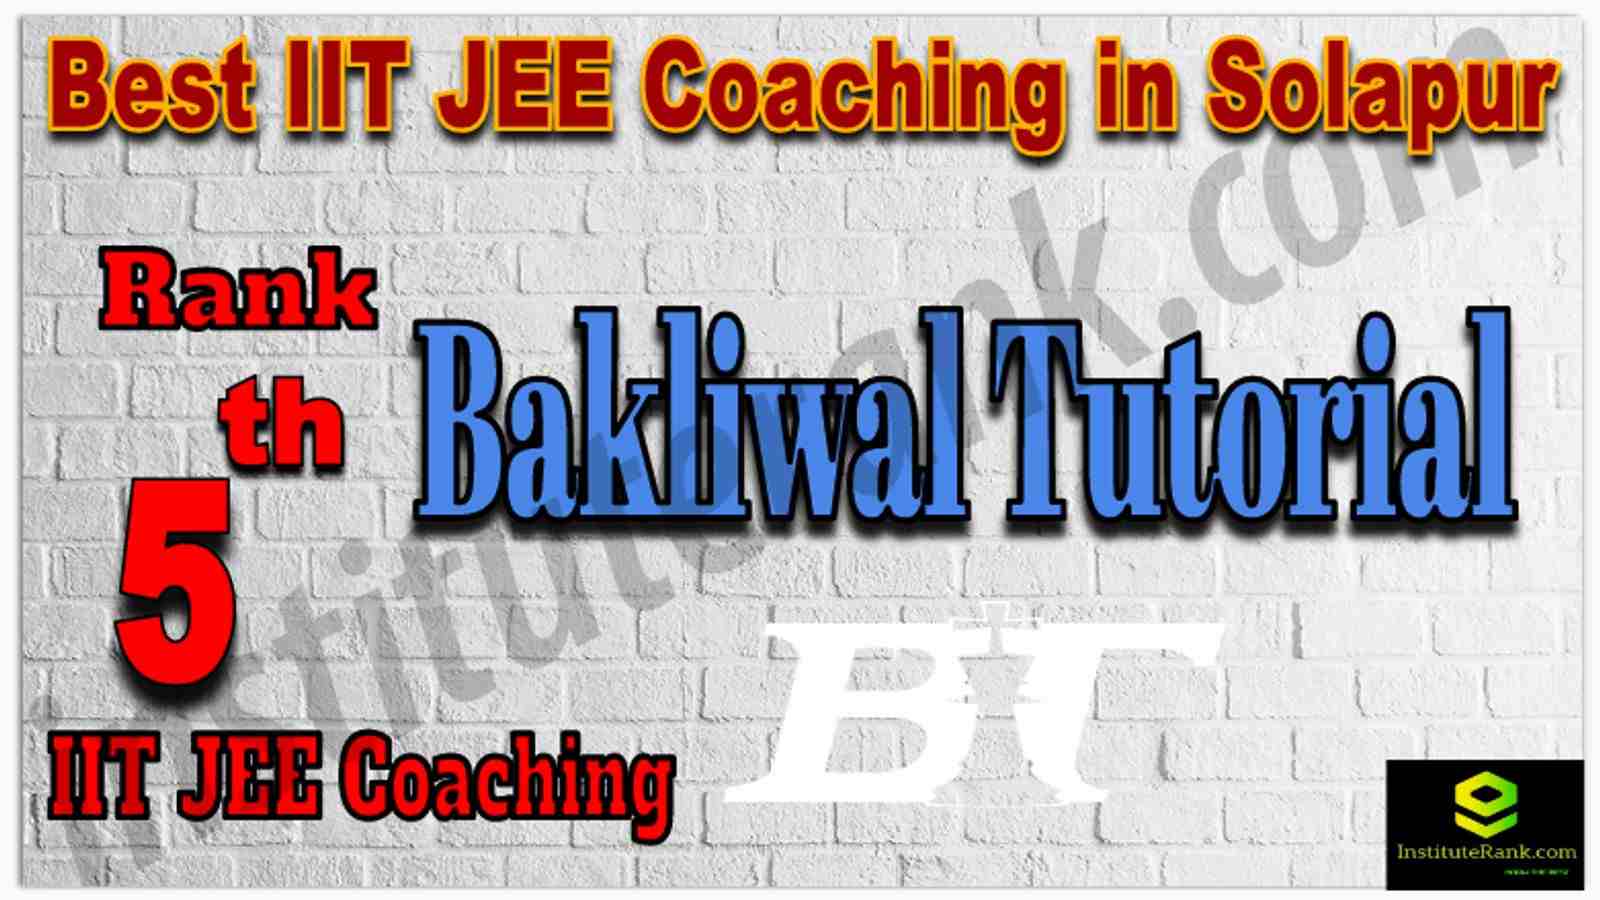 Rank 5th Best IIT JEE Coaching in Solapur